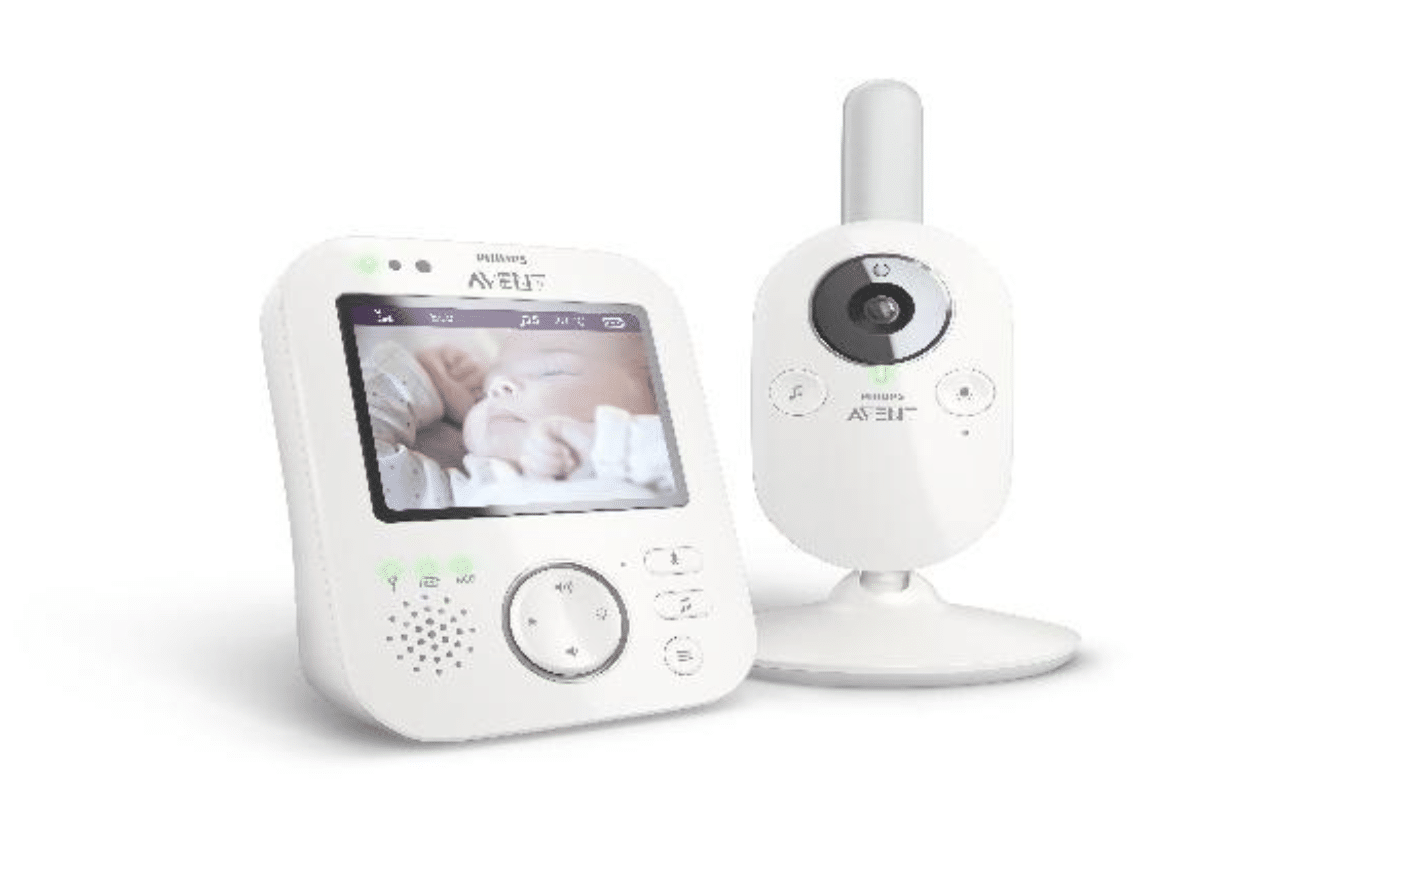 Philips Avent Baby Monitors Recalled for Fire & Burn Hazard